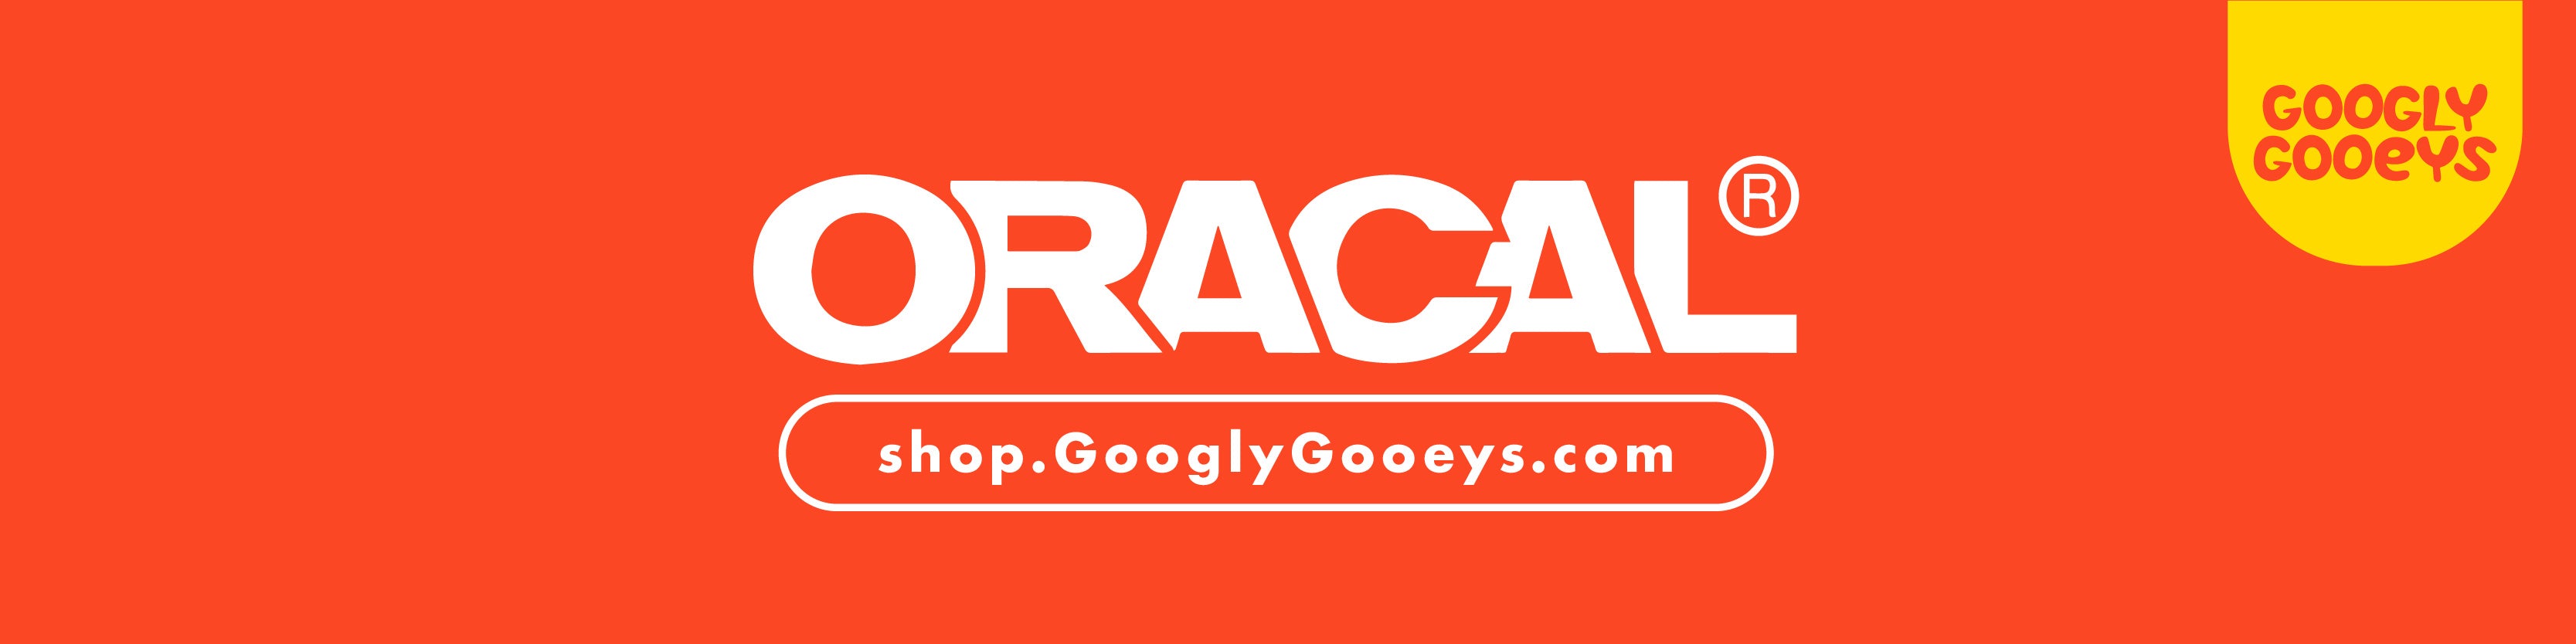 Googly Gooeys Shop - Oracal